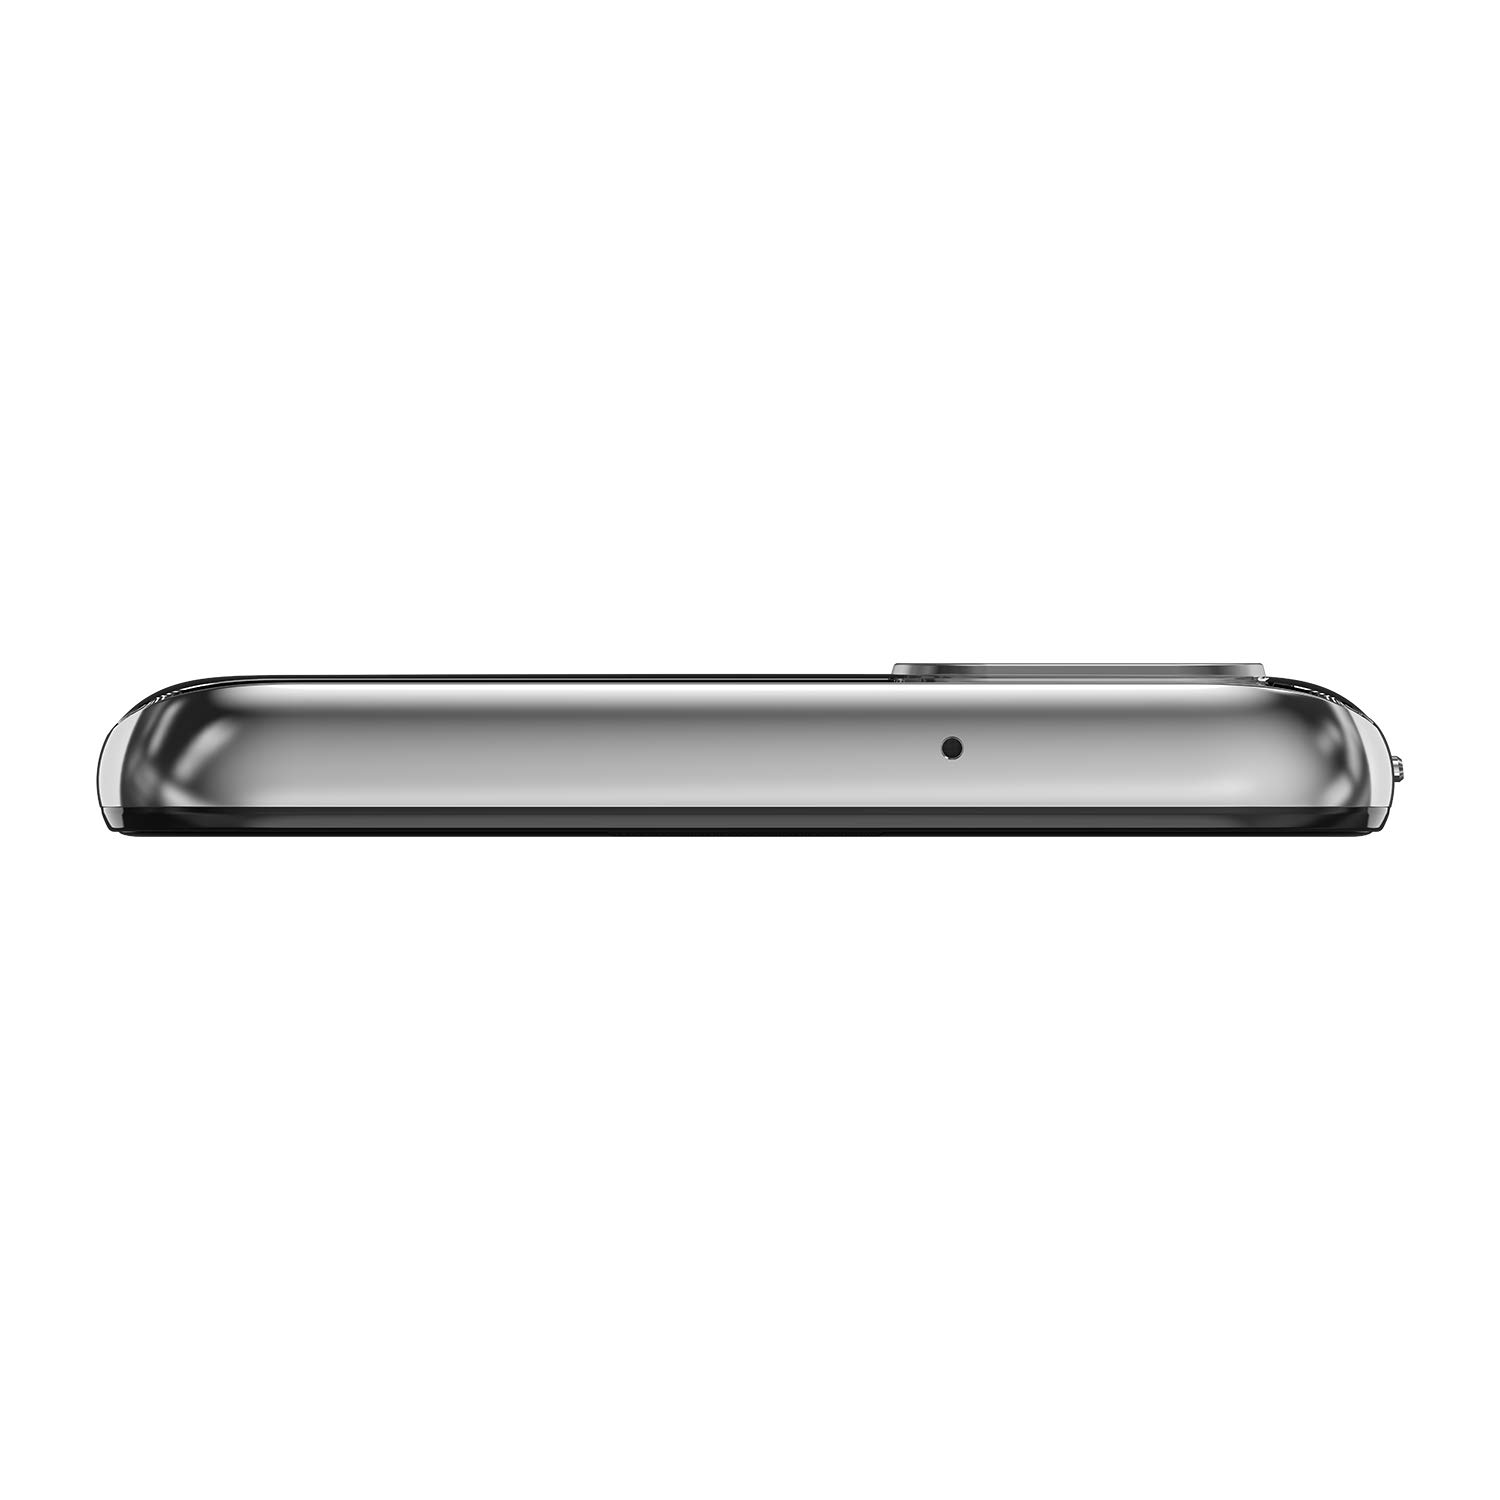 Moto G Stylus | 2021 | 2-Day Battery | Unlocked | Made for US by Motorola | 4/128GB | 48MP Camera | White